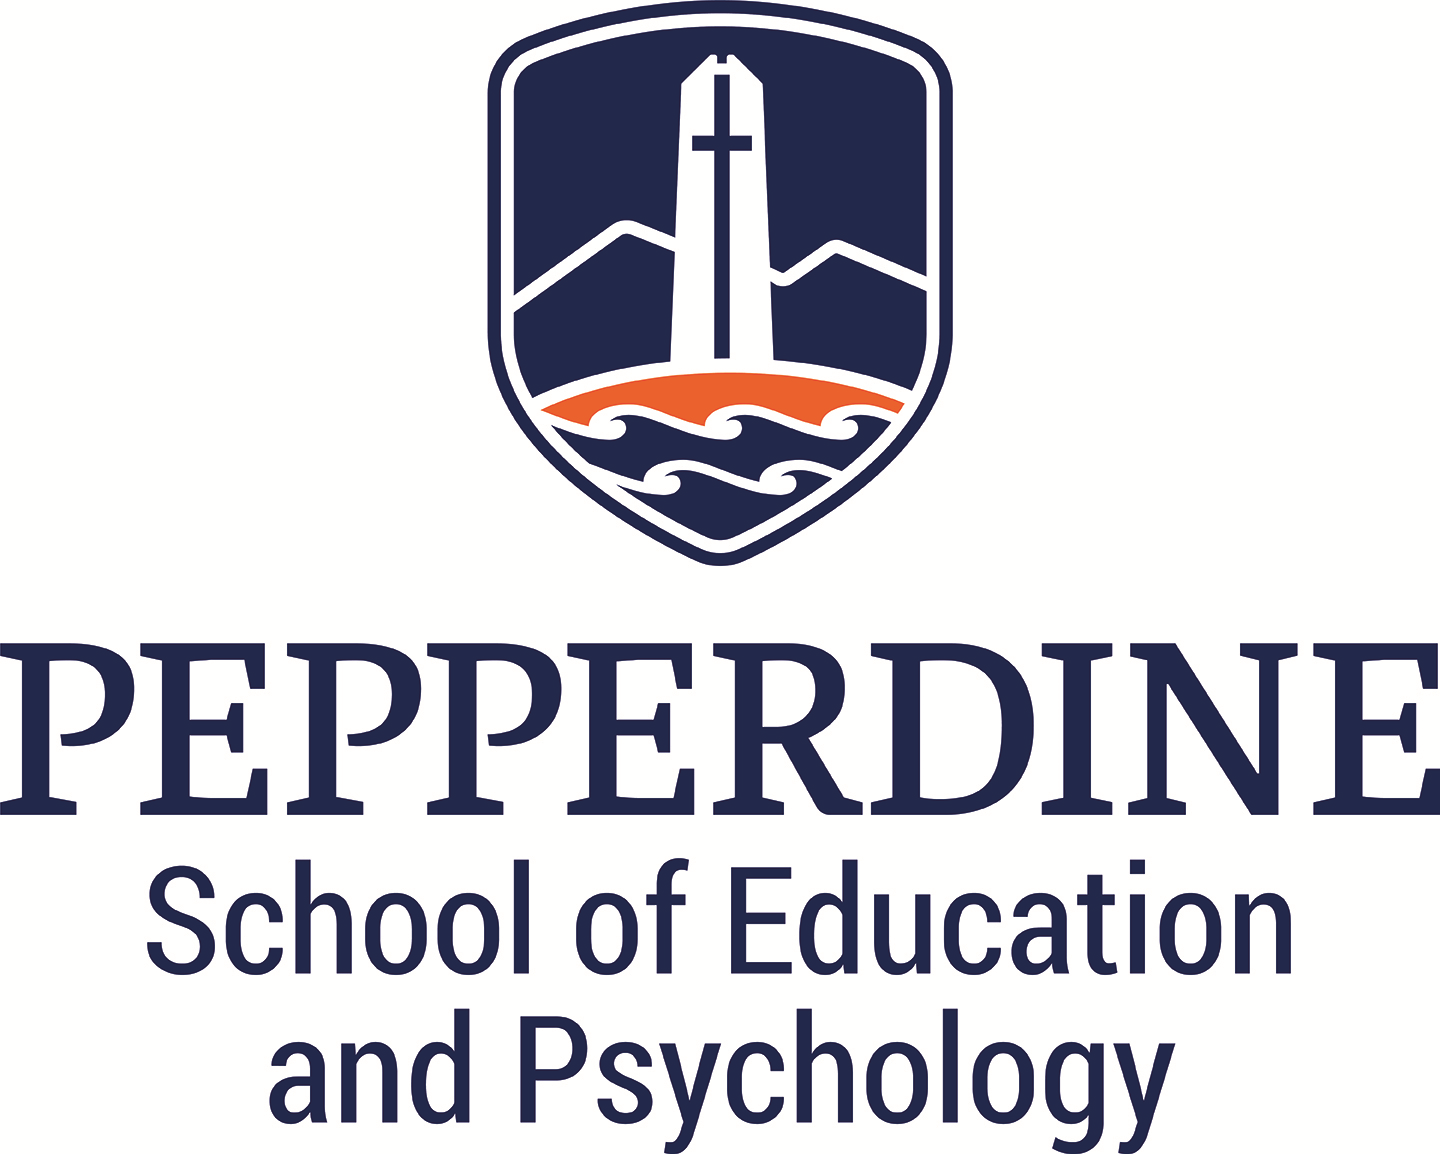 Master of Arts in Clinical Psychology Degrees Program at Pepperdine University